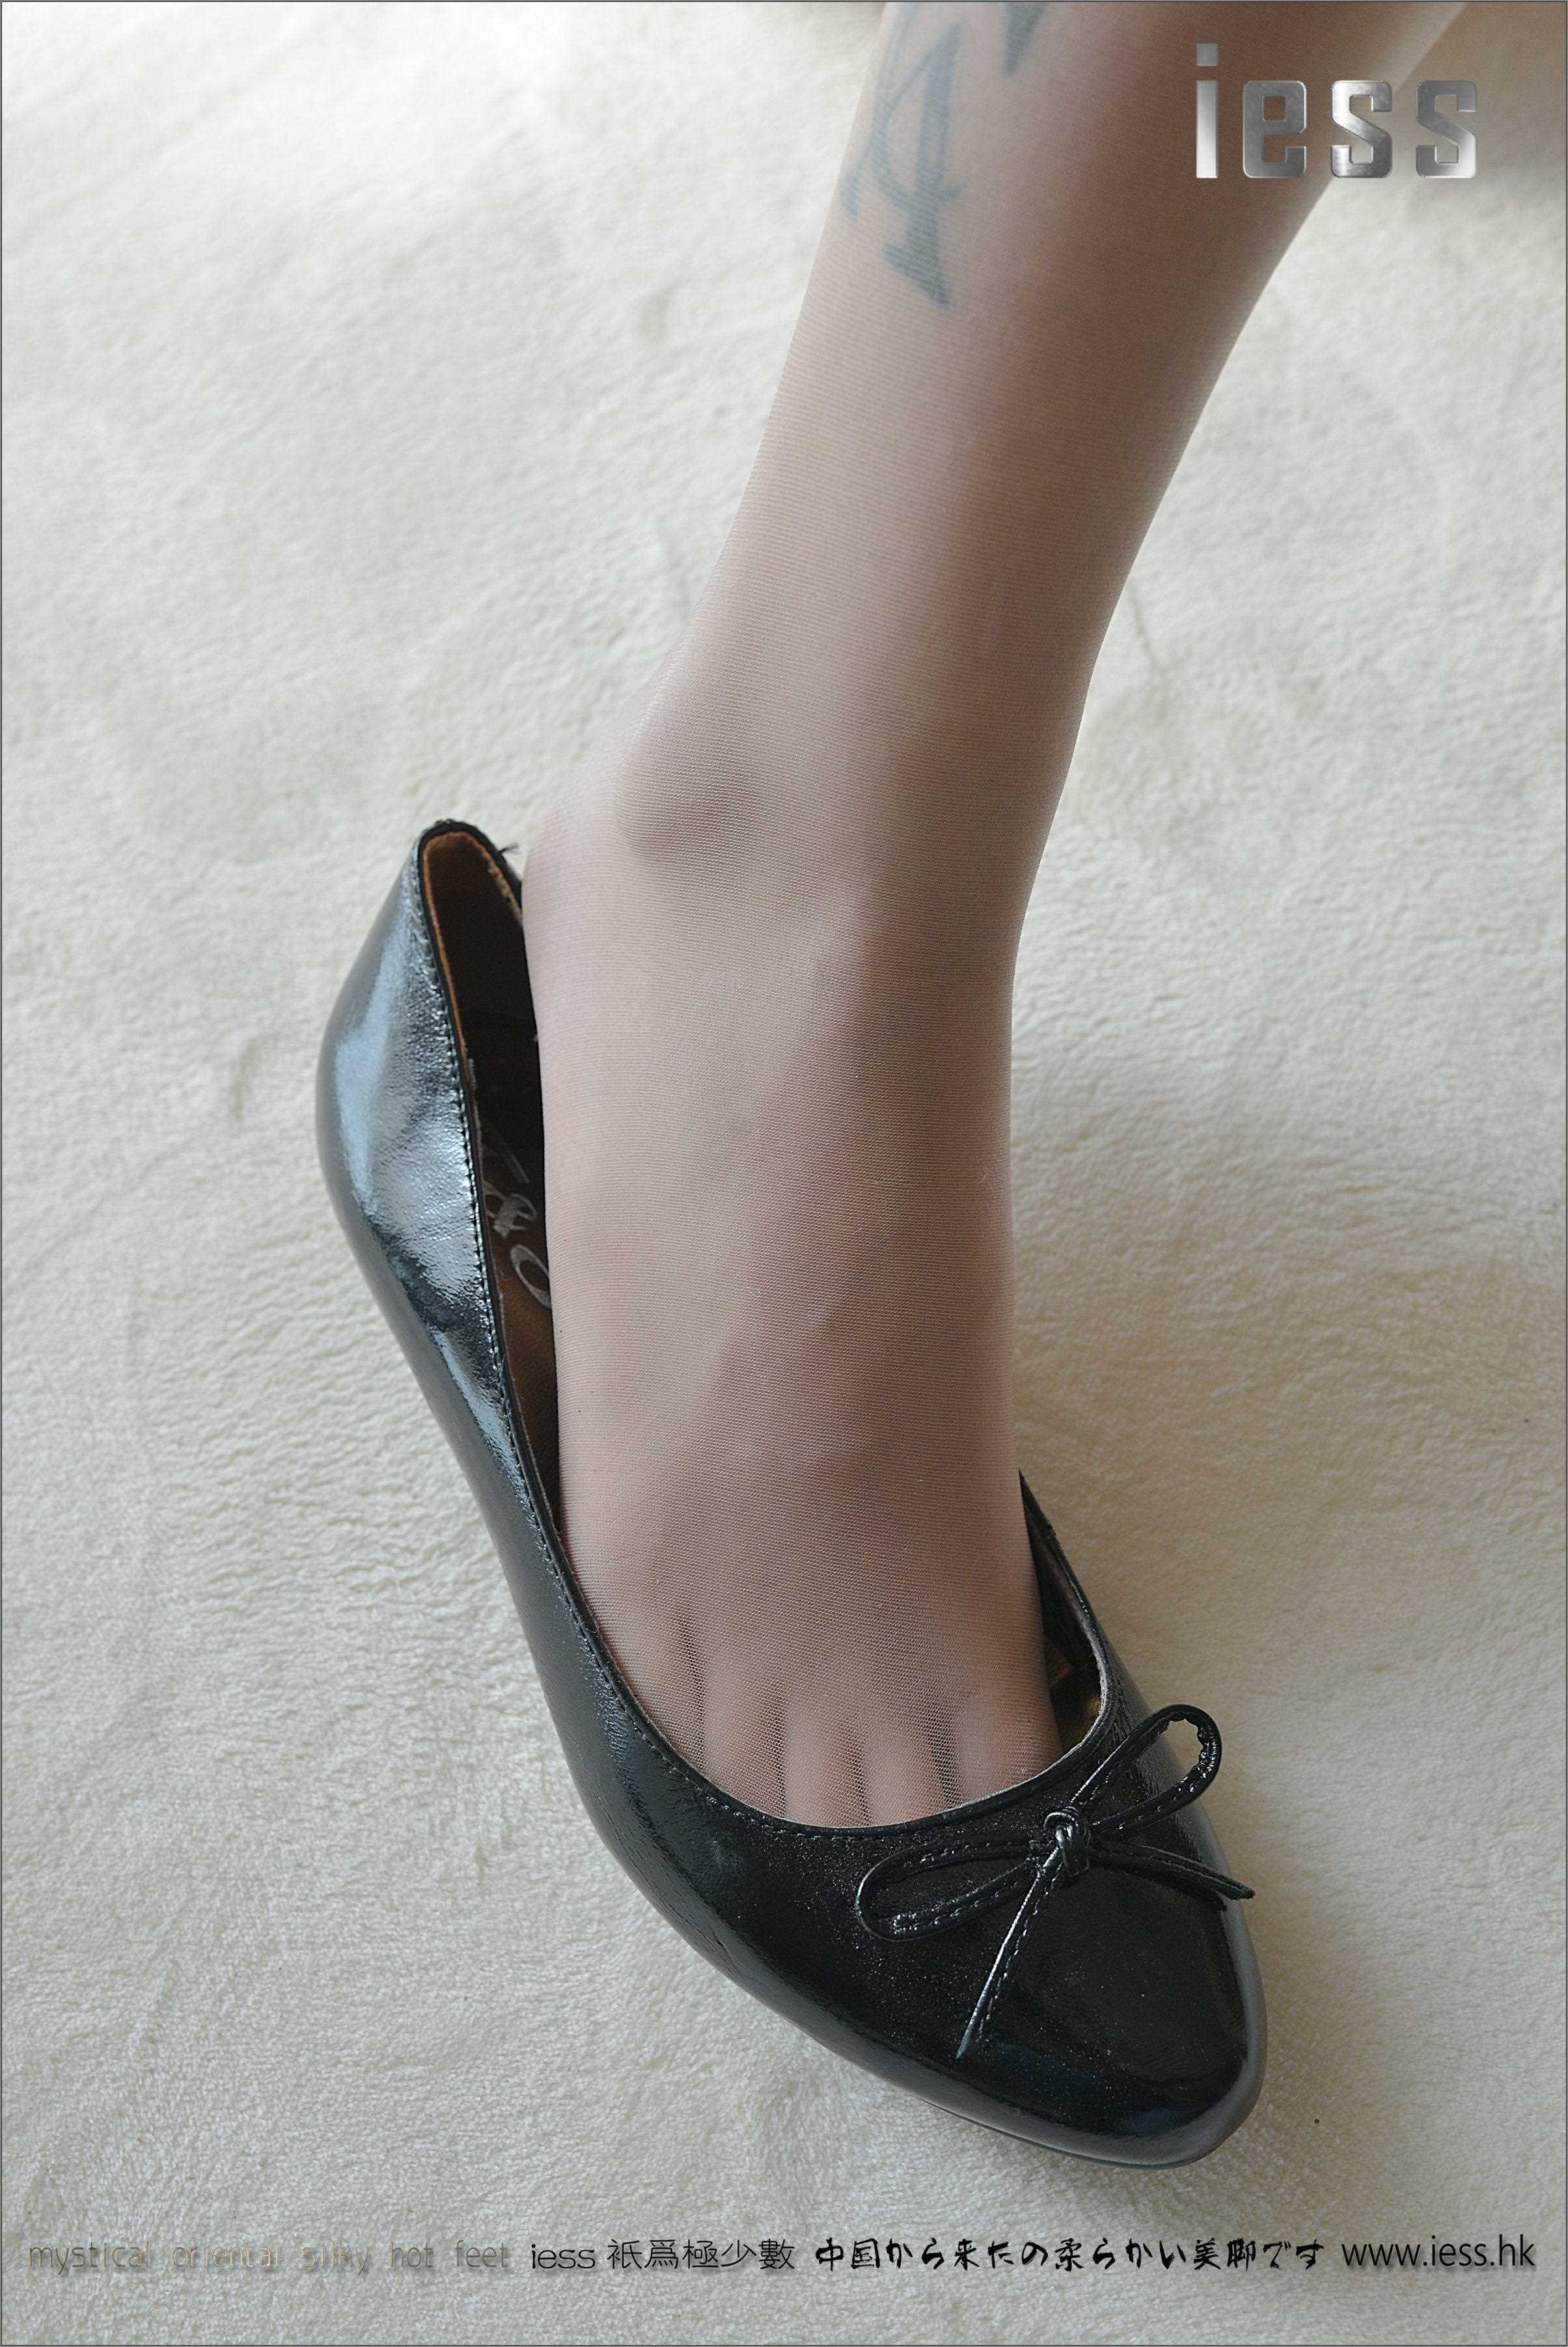 China Beauty Legs and feet 159